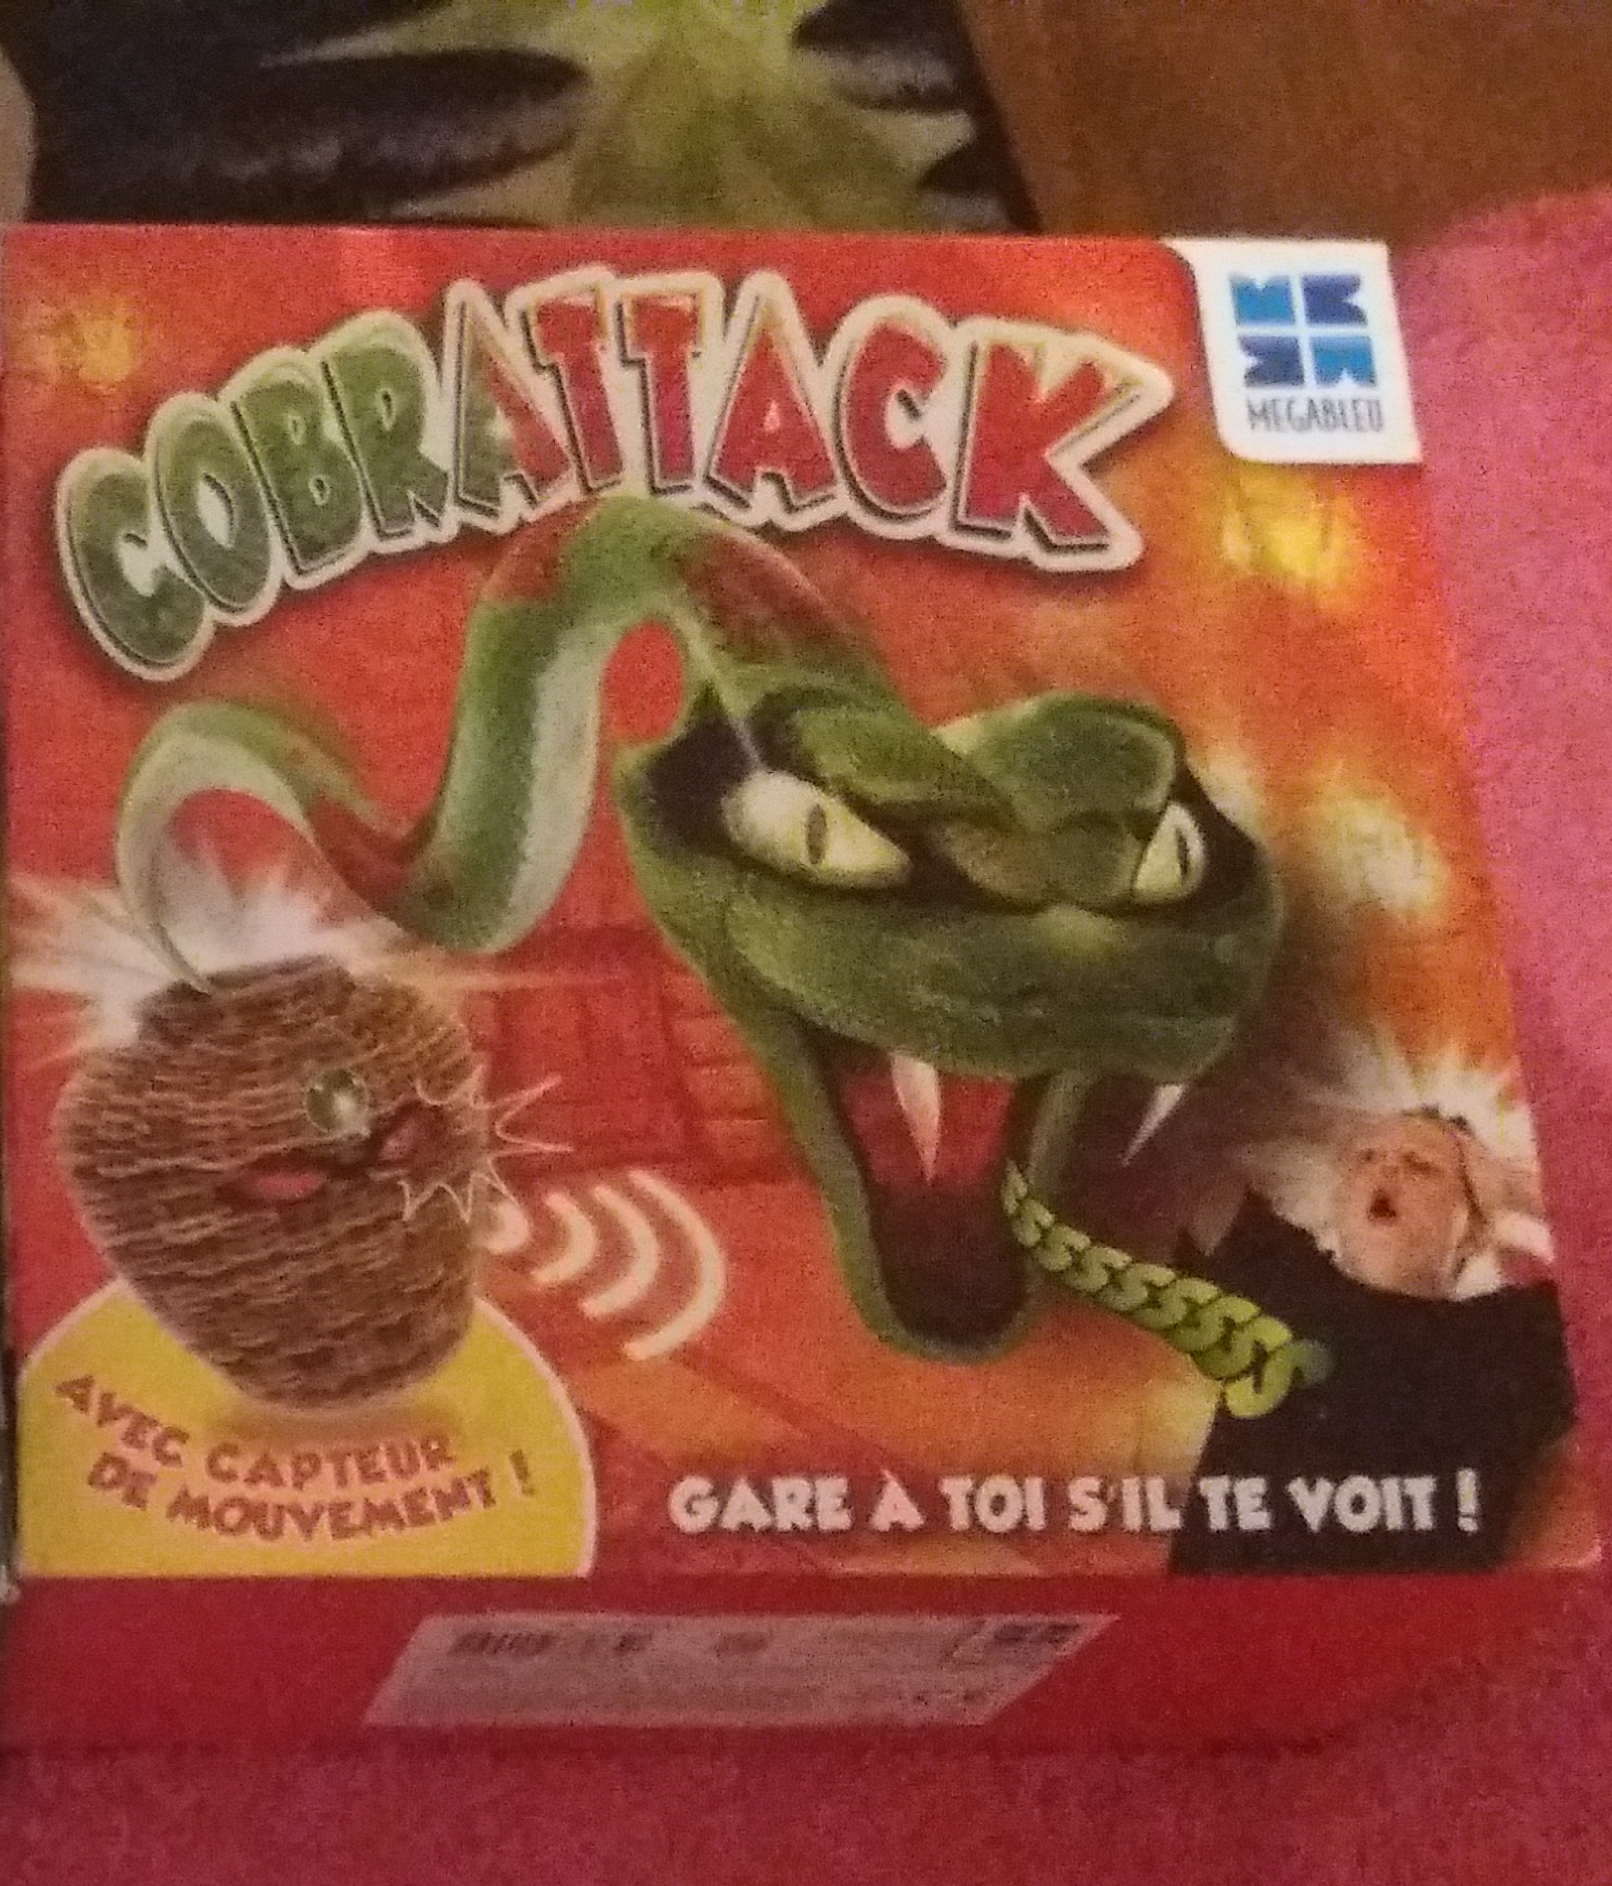 Cobrattack